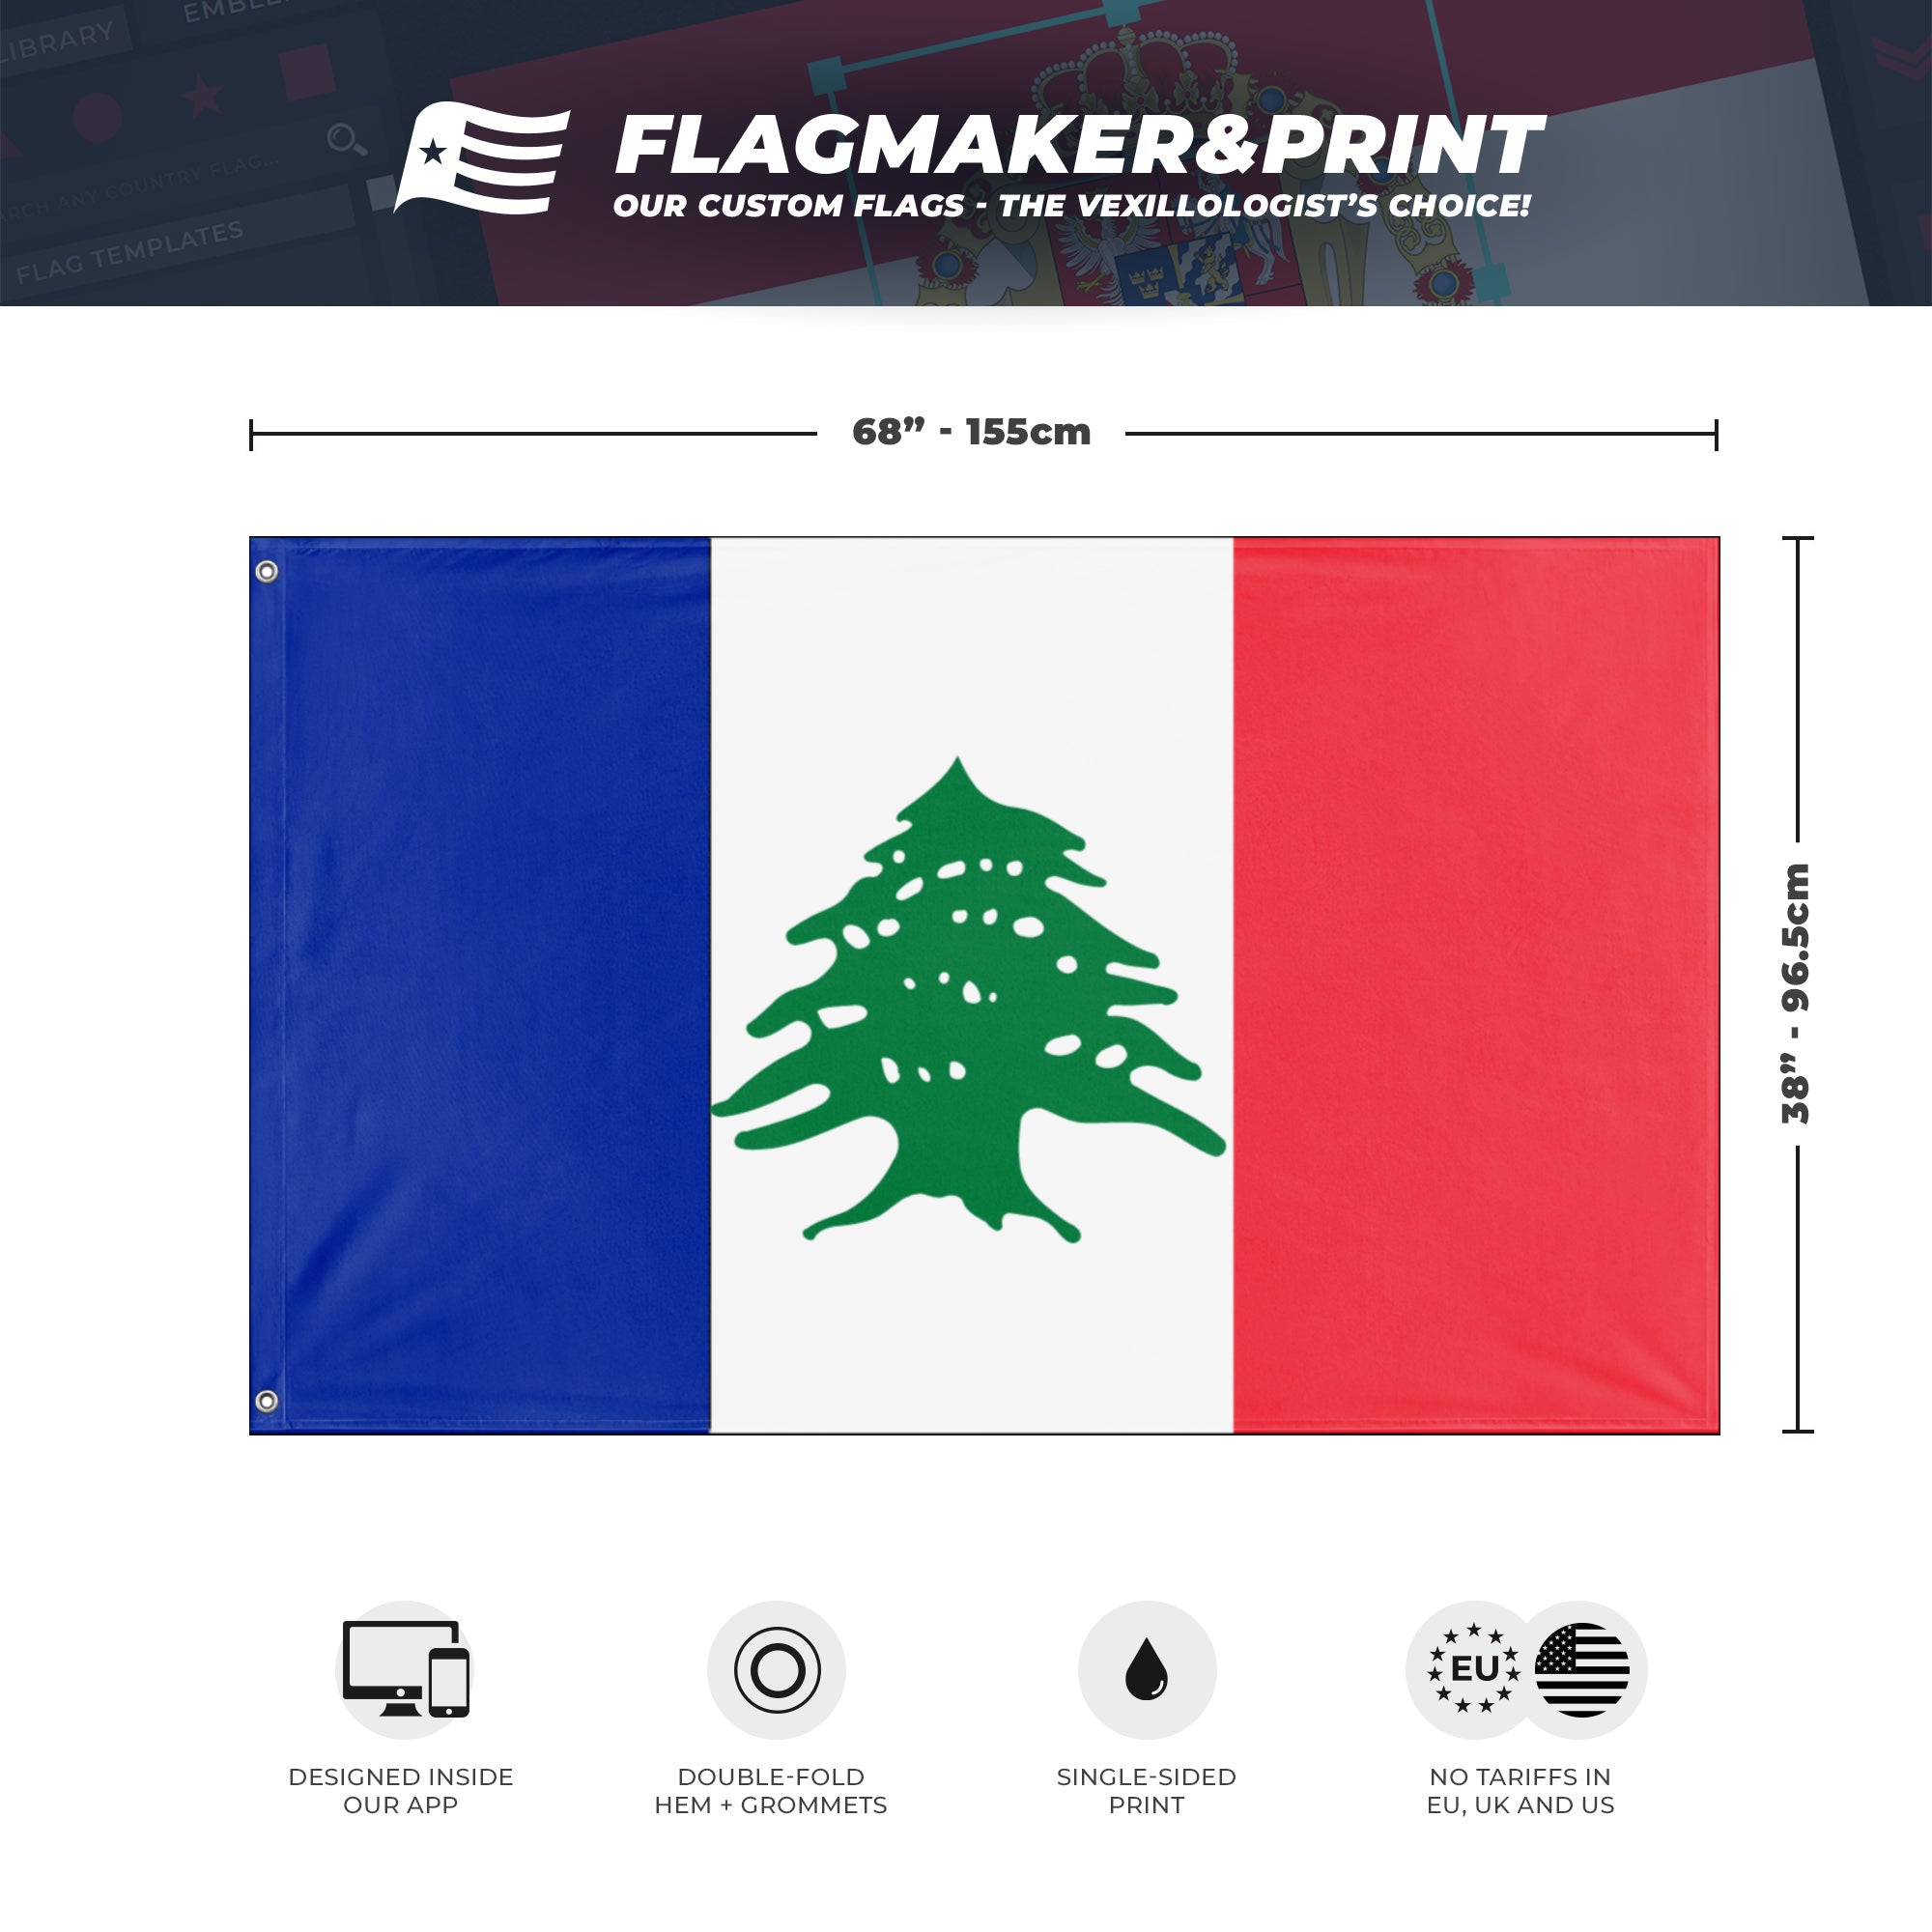 lebanon flag